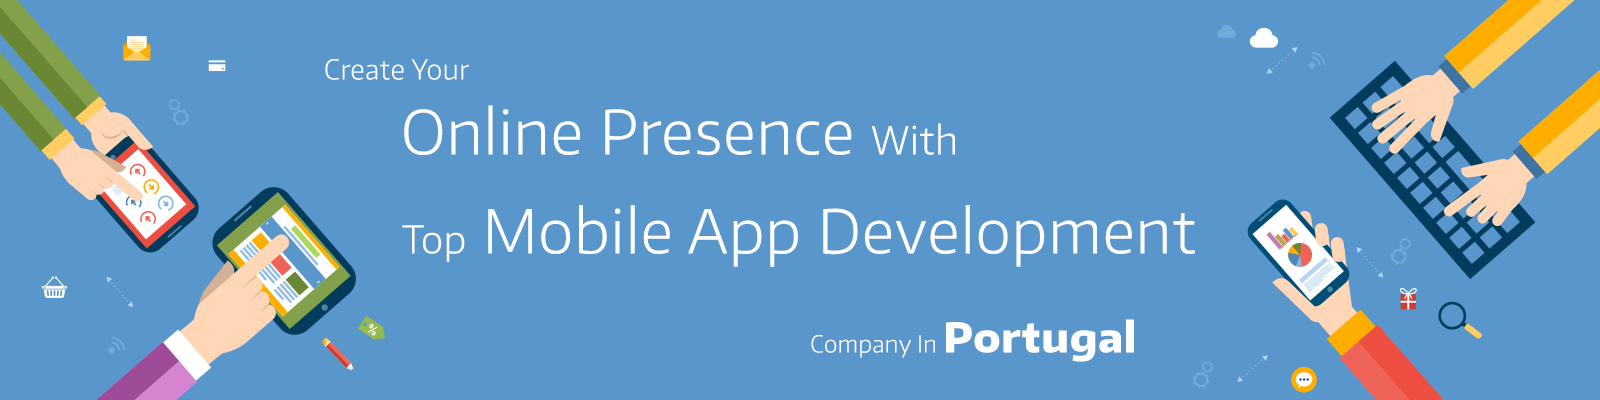 mobile app development company portugal